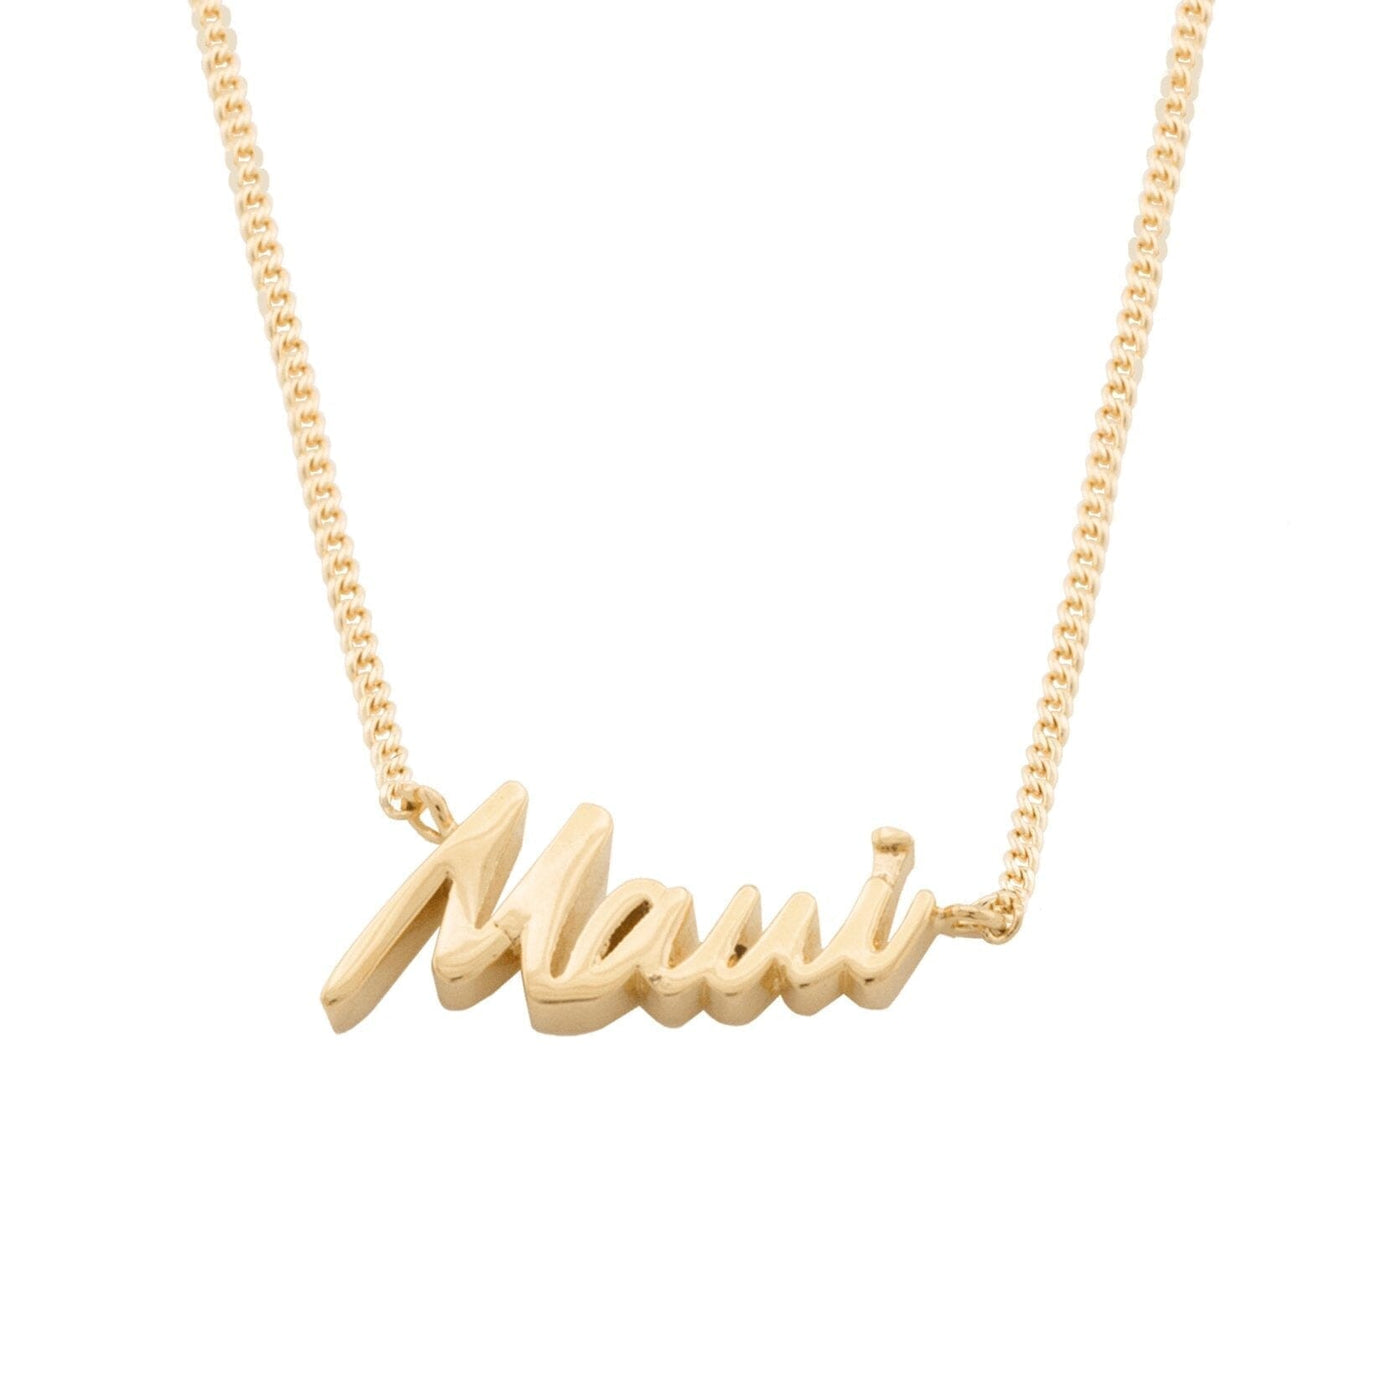 Maui Signature Necklace - Capsul